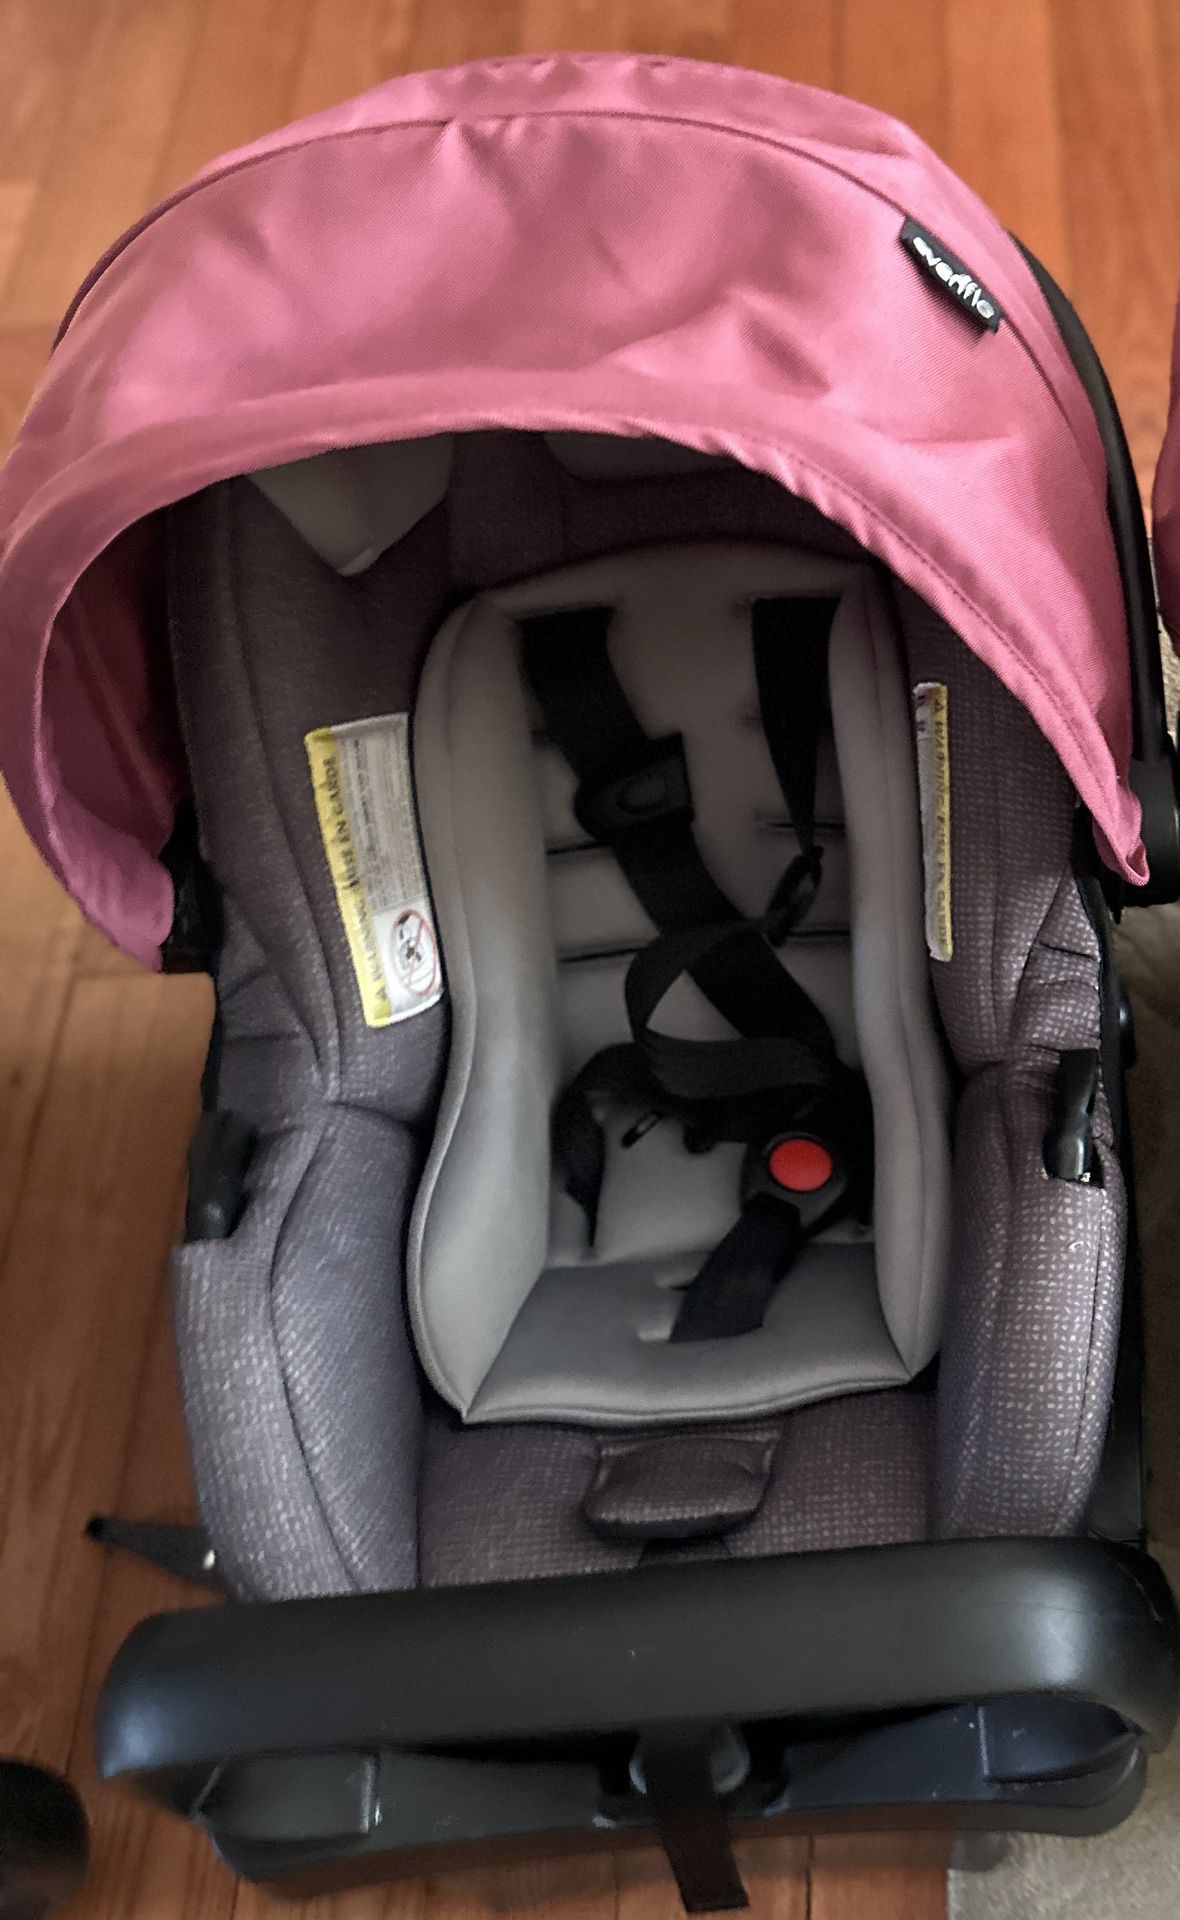 Evenflo LiteMax Infant Car Seat (Dusty Rose Pink)